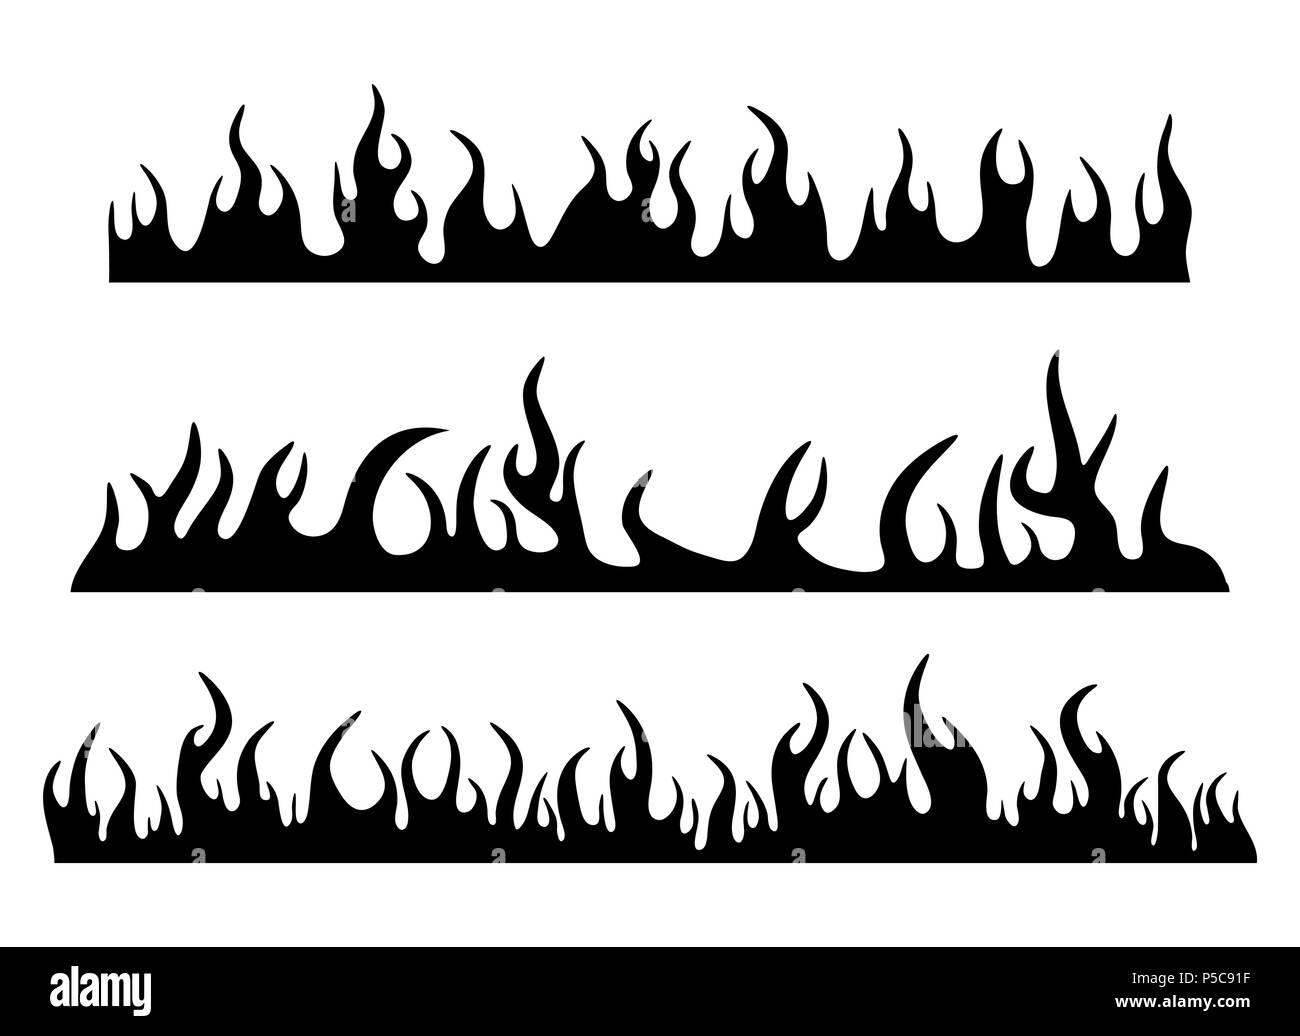 Burning fire flame silhouette set banner horizontal design isolated on white Stock Vector